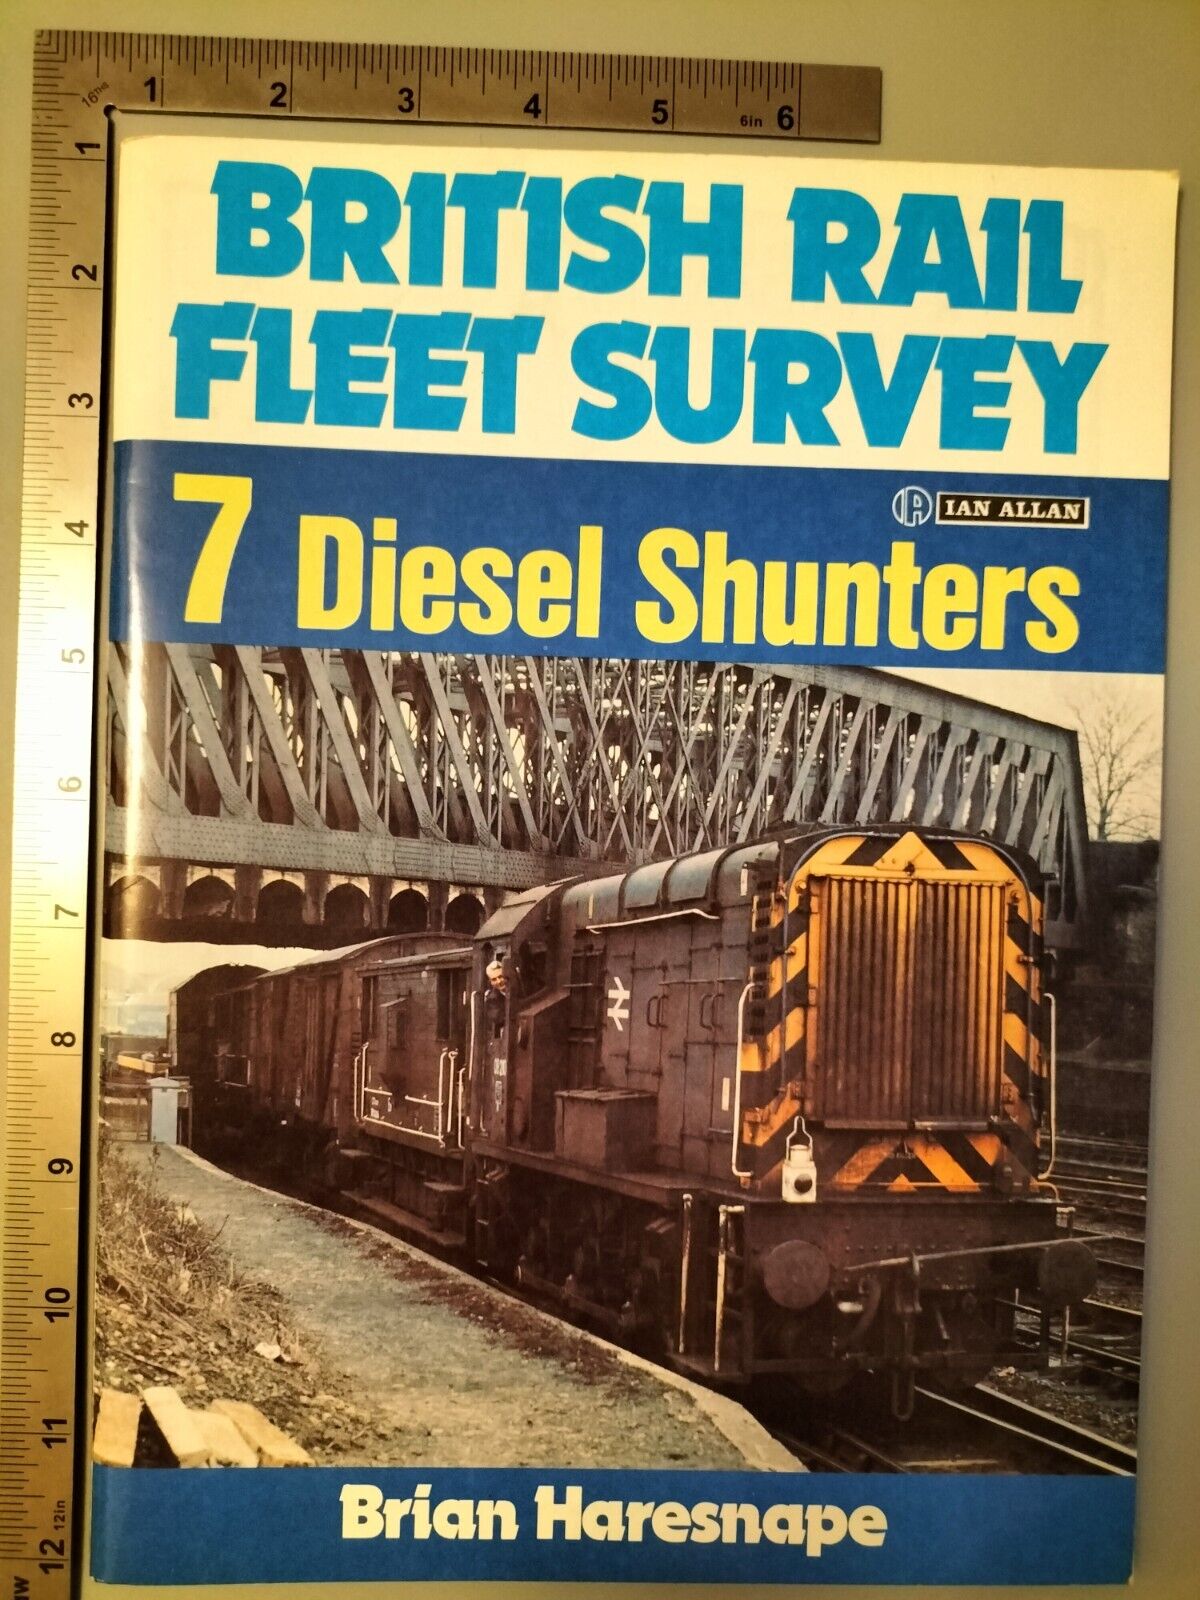 British Rail Fleet Survey 7 Diesel Shunters Brian Haresnape 1984 PB Ian Allan